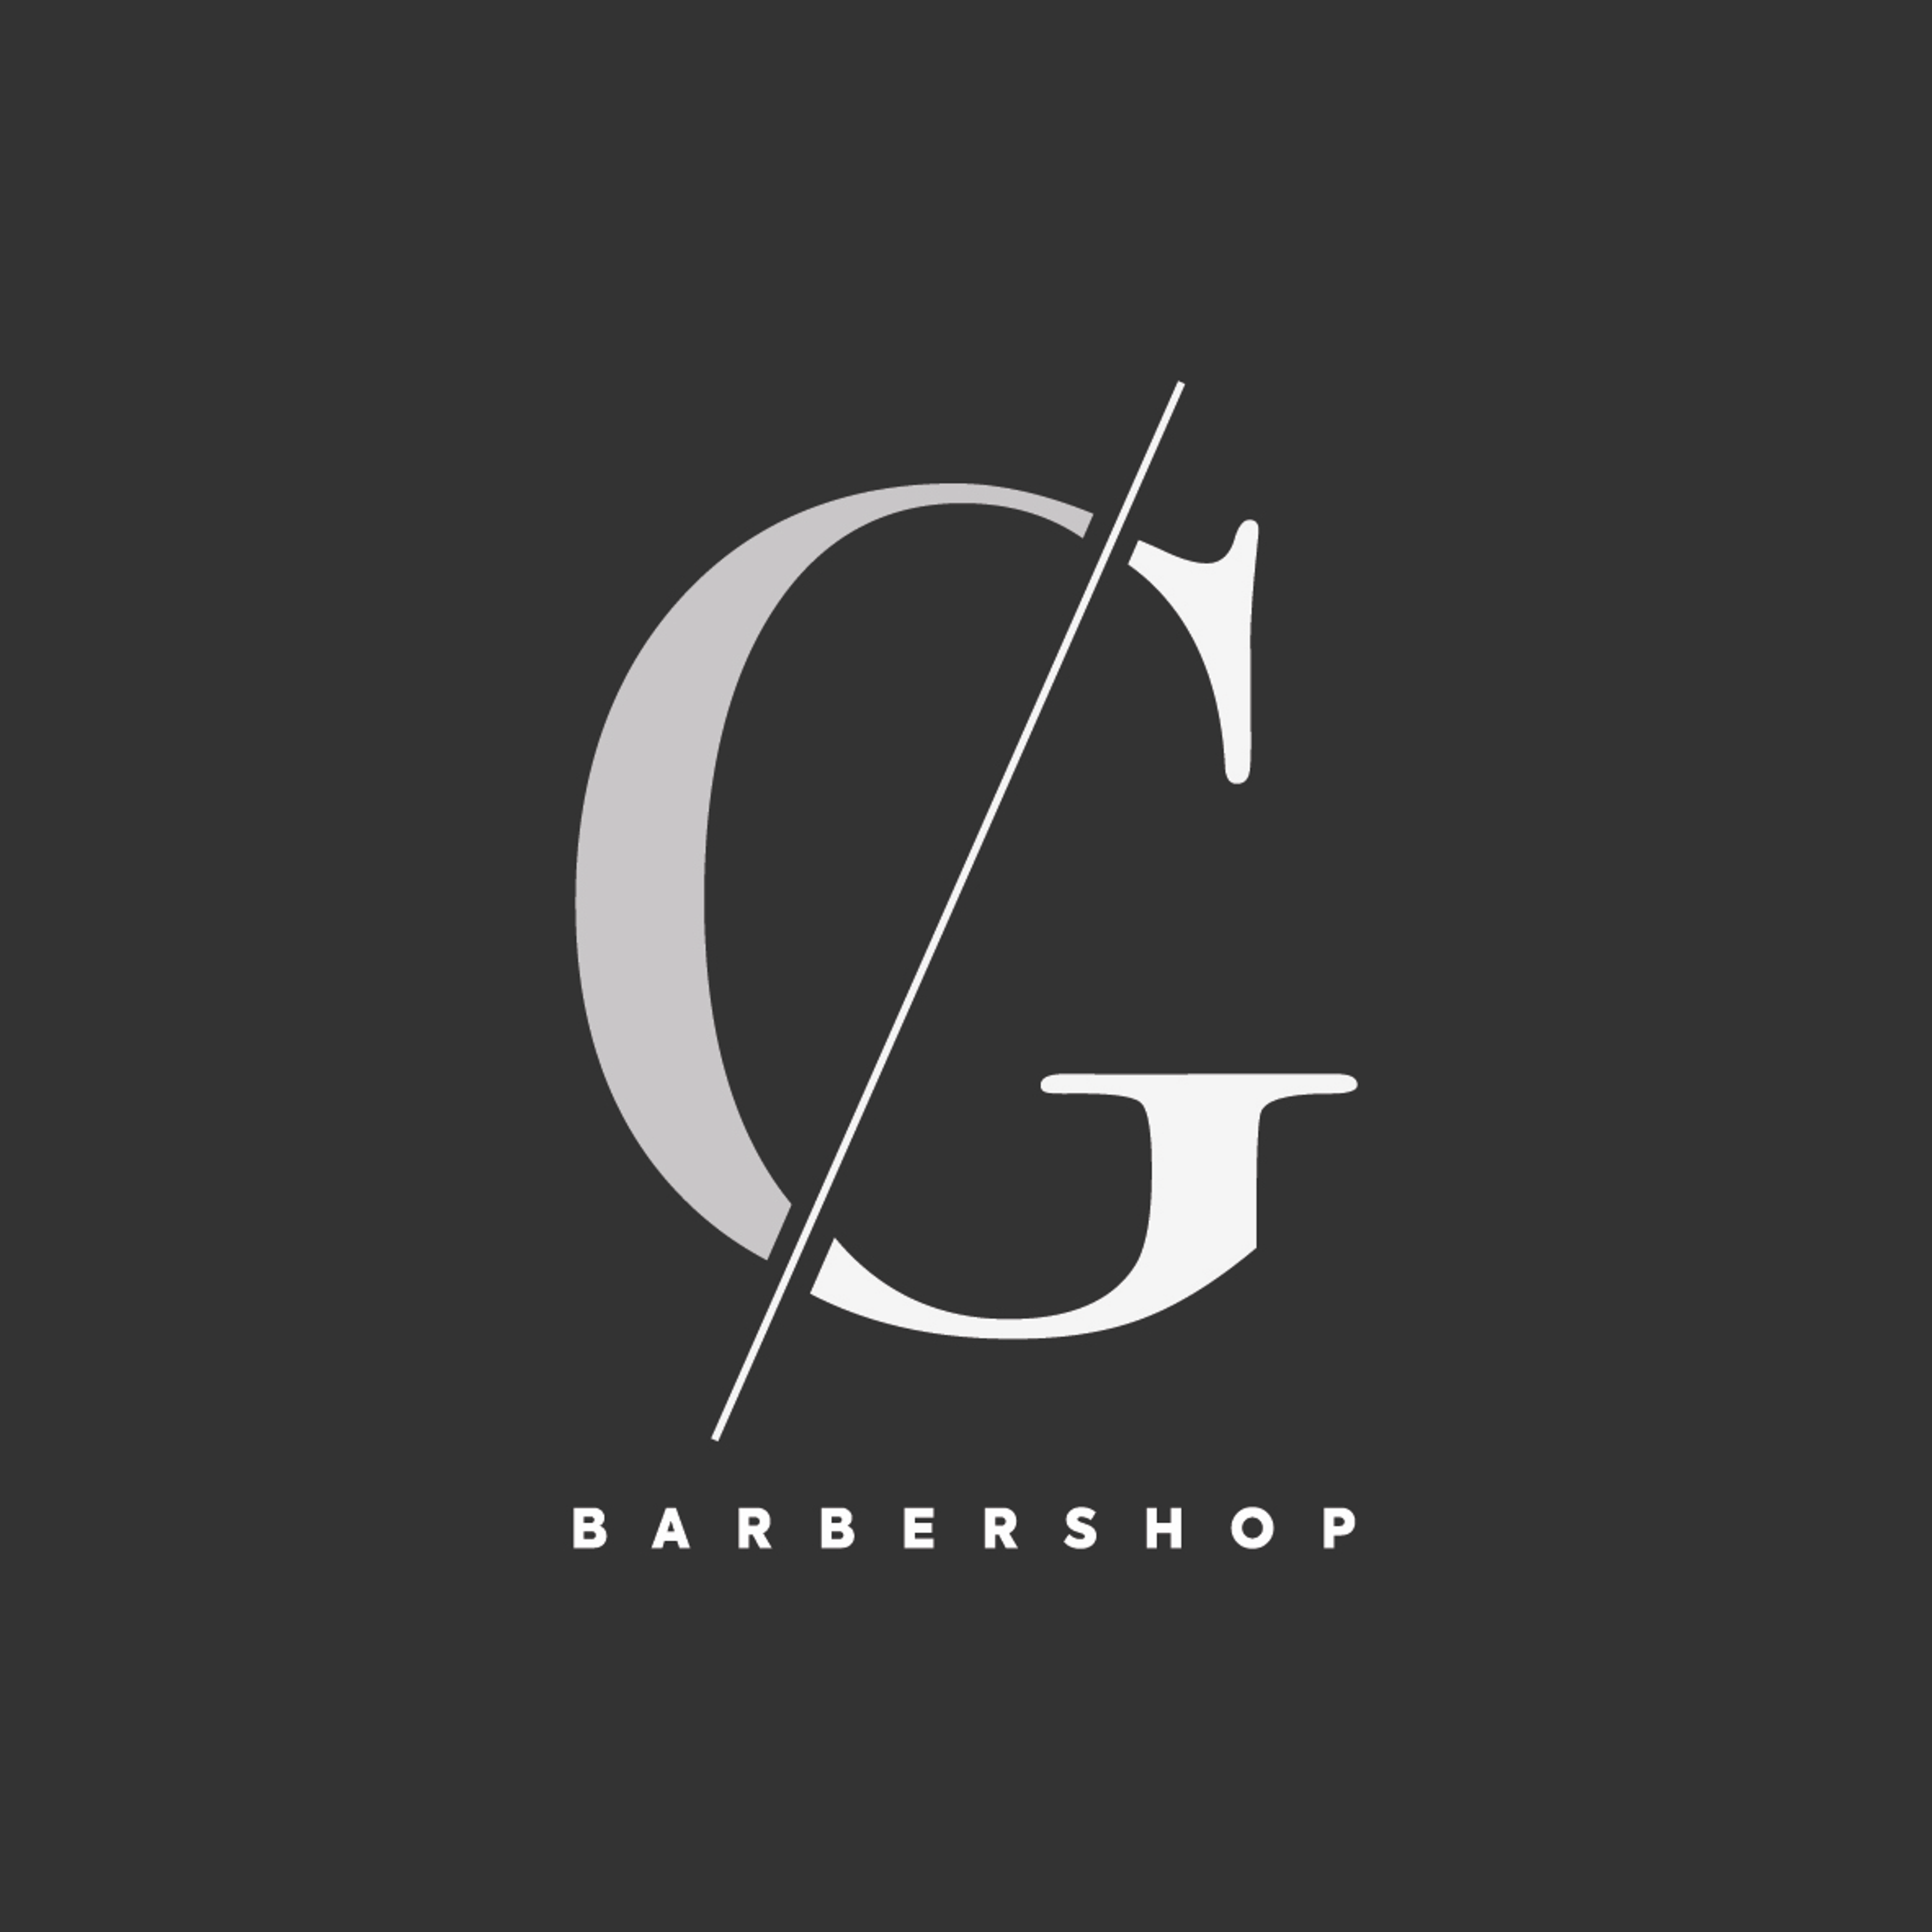 New cg barbershop logo